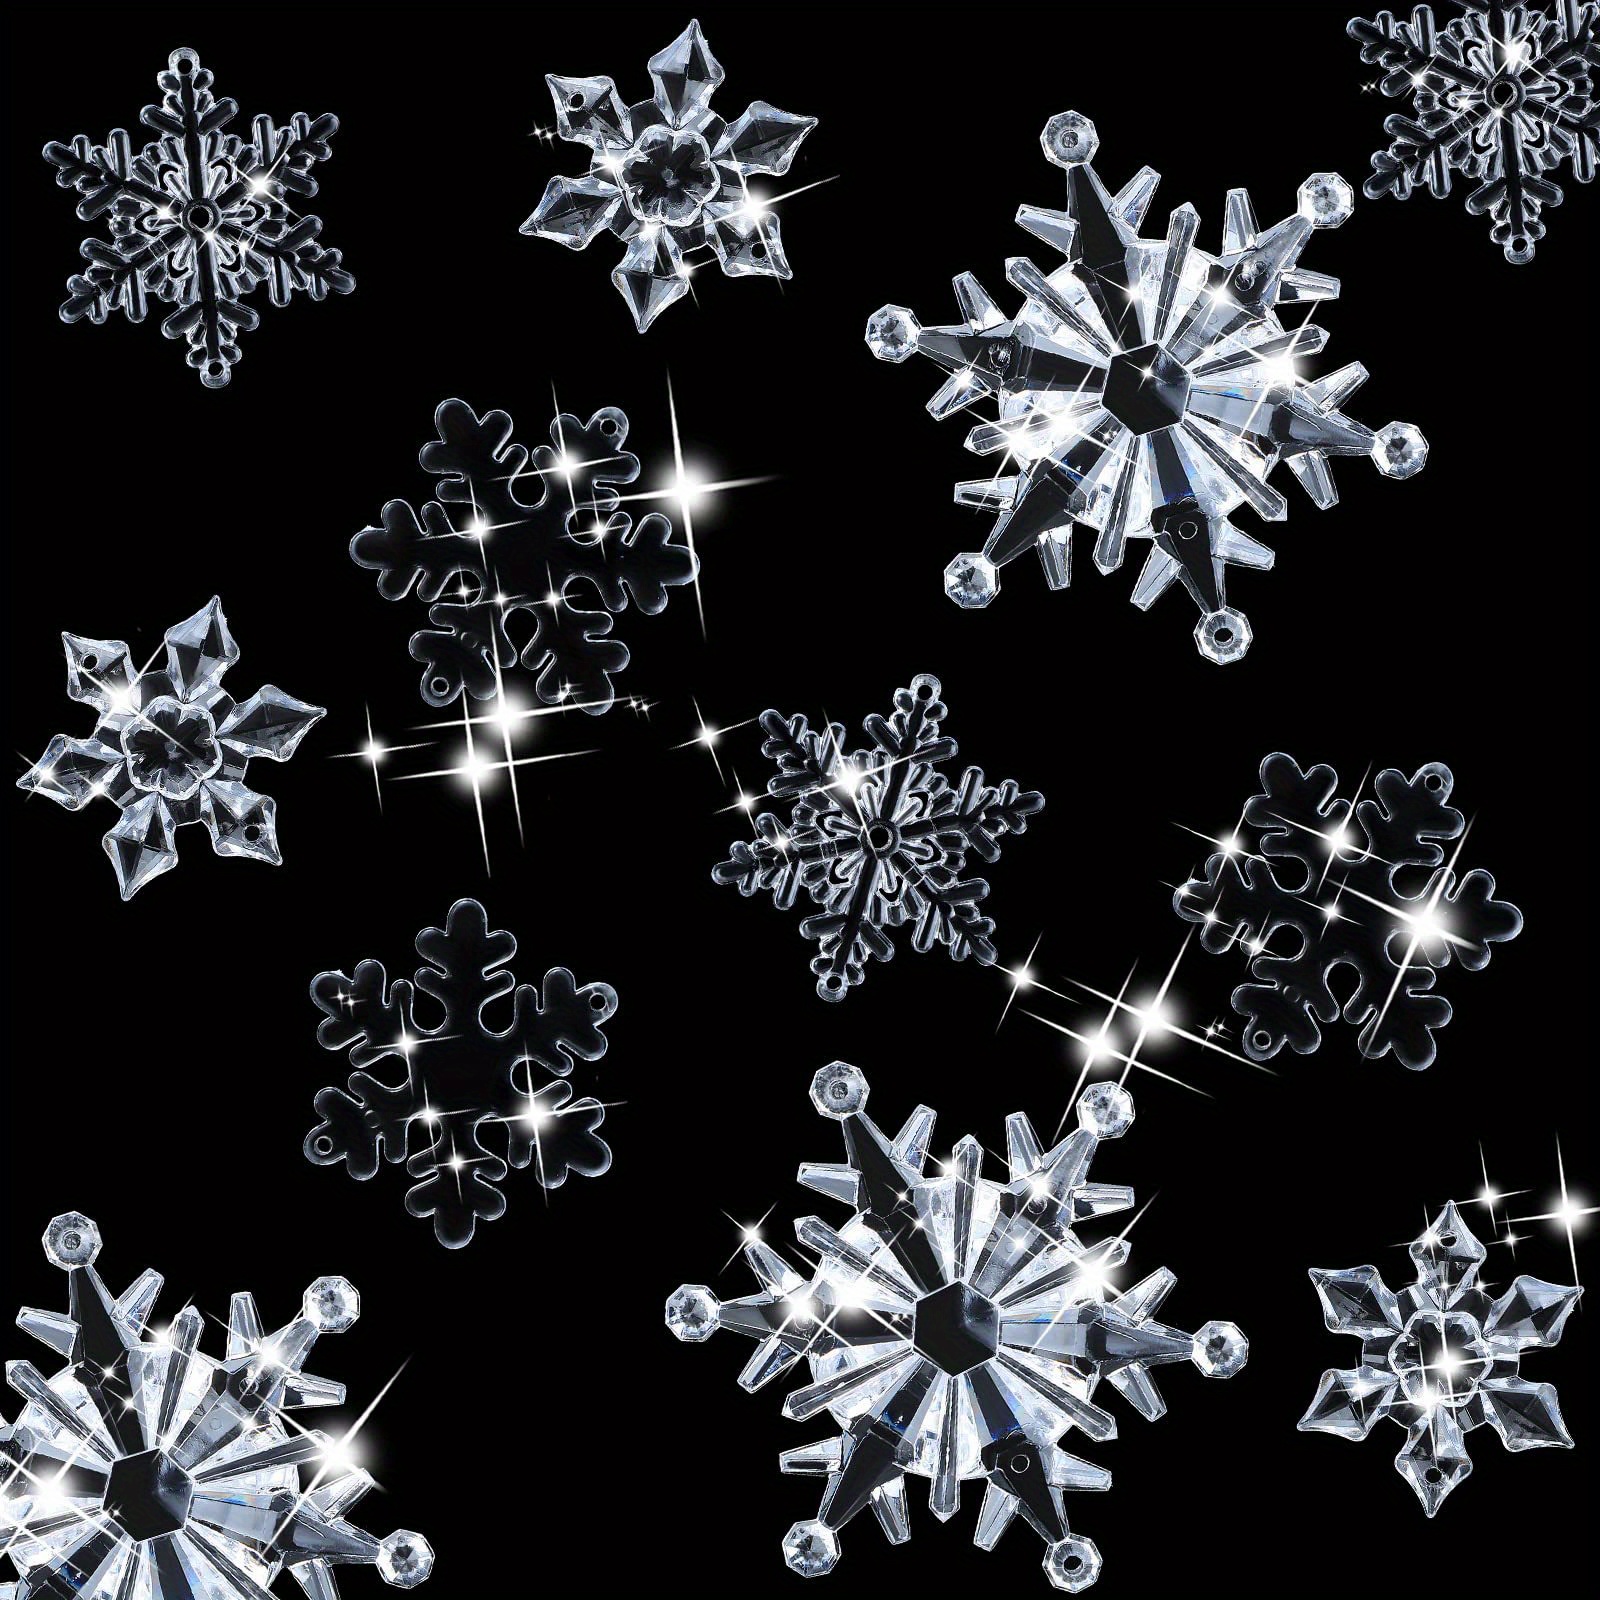 White Snowflake Decorations